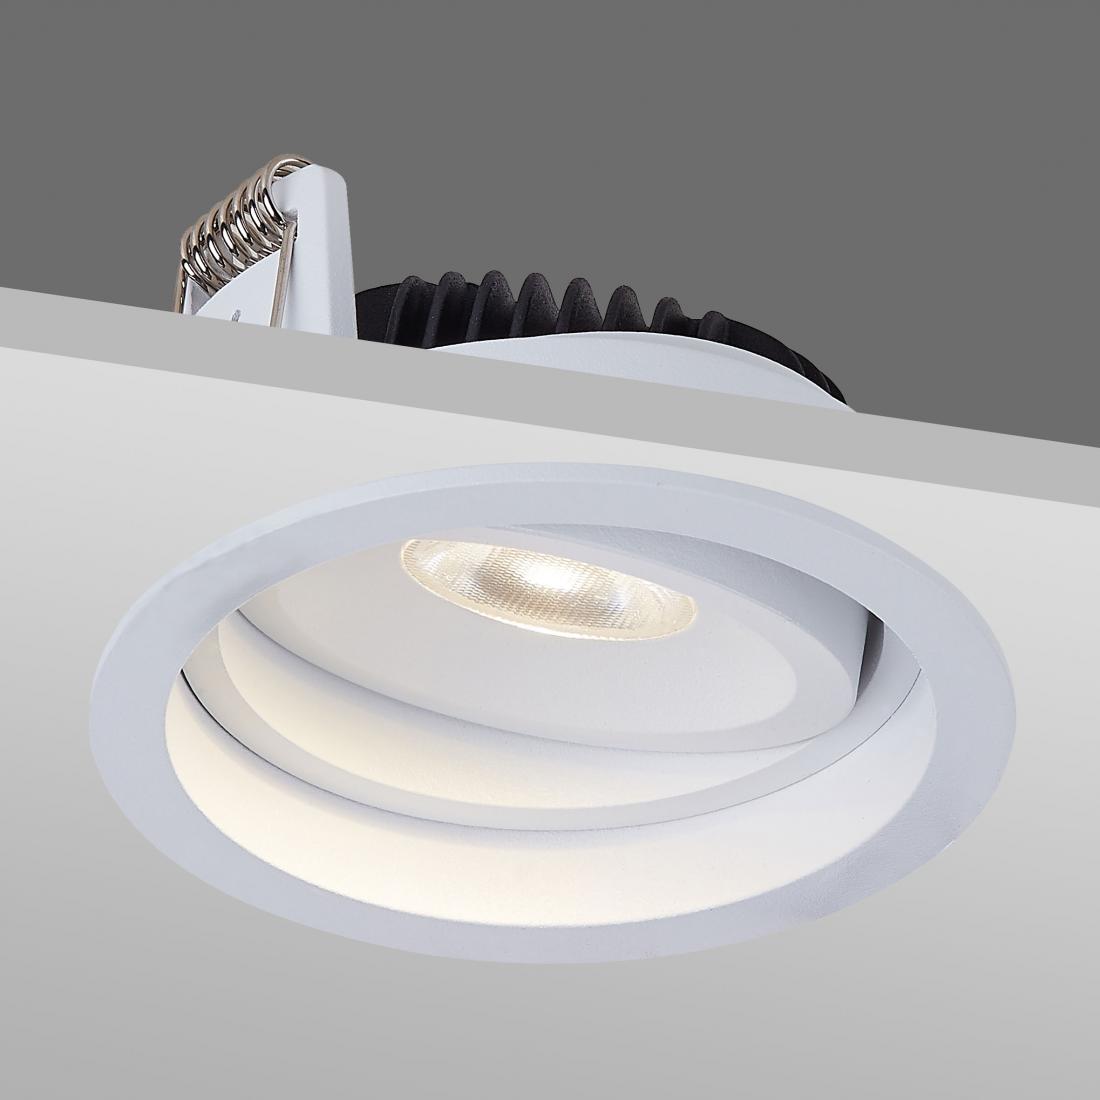 Nordic smart adjustable 7watt led cob spot downlight with different height 